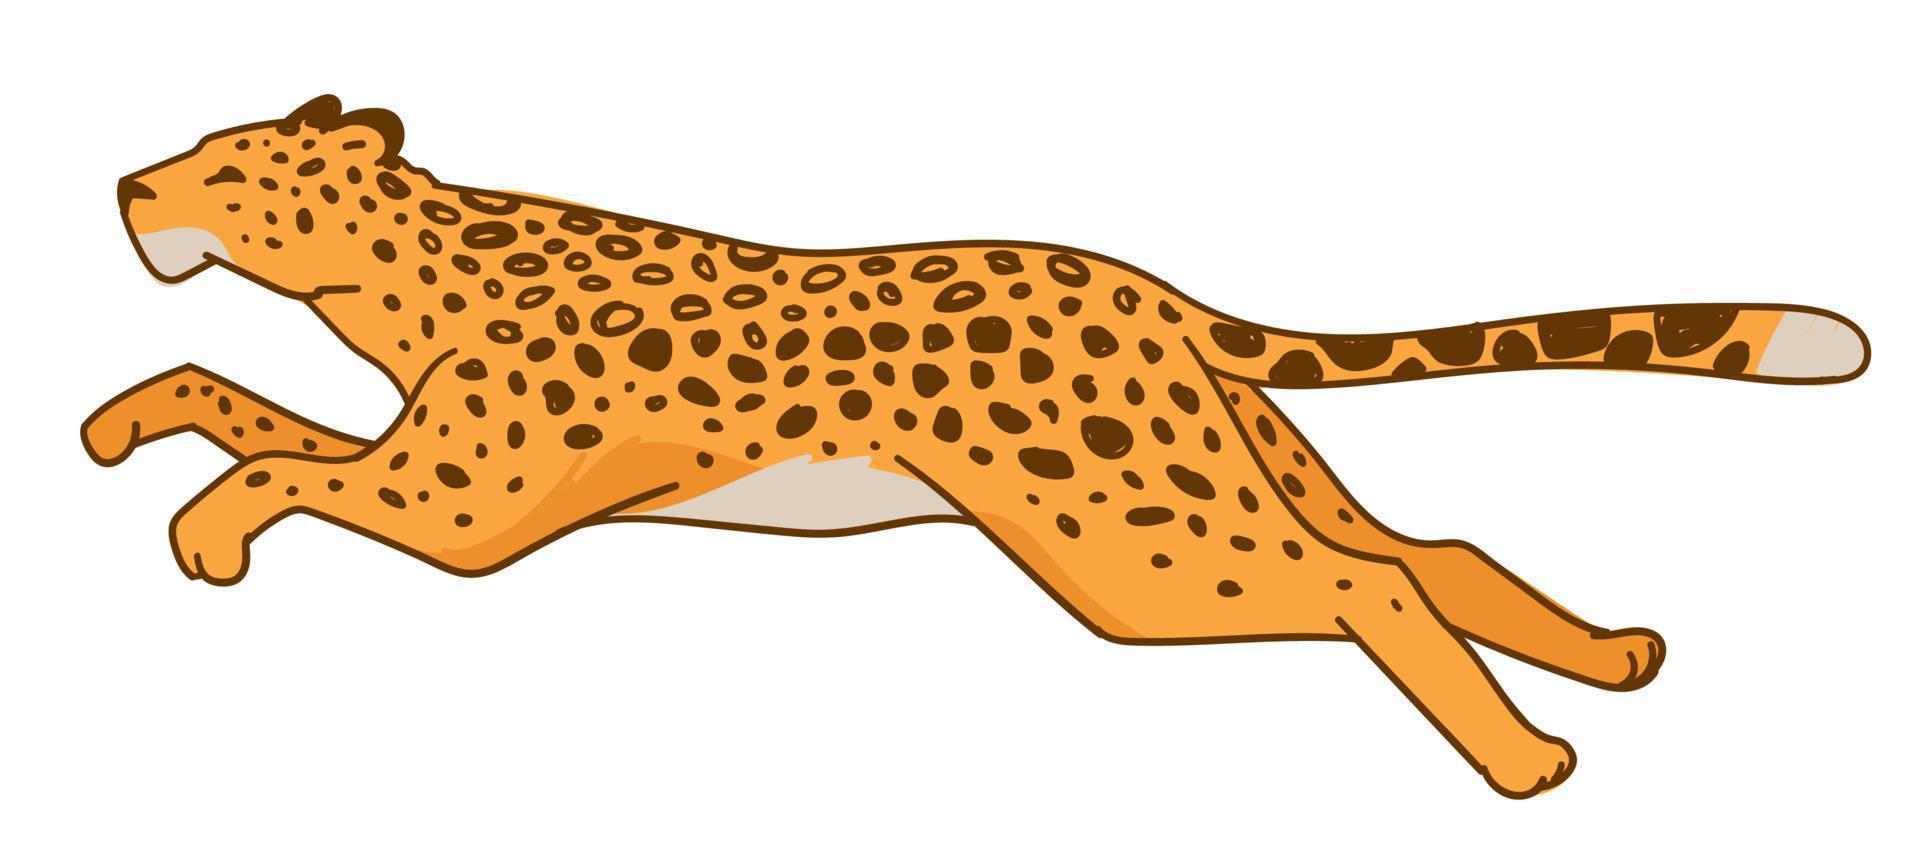 Running leopard or speedy cheetah predator animal vector